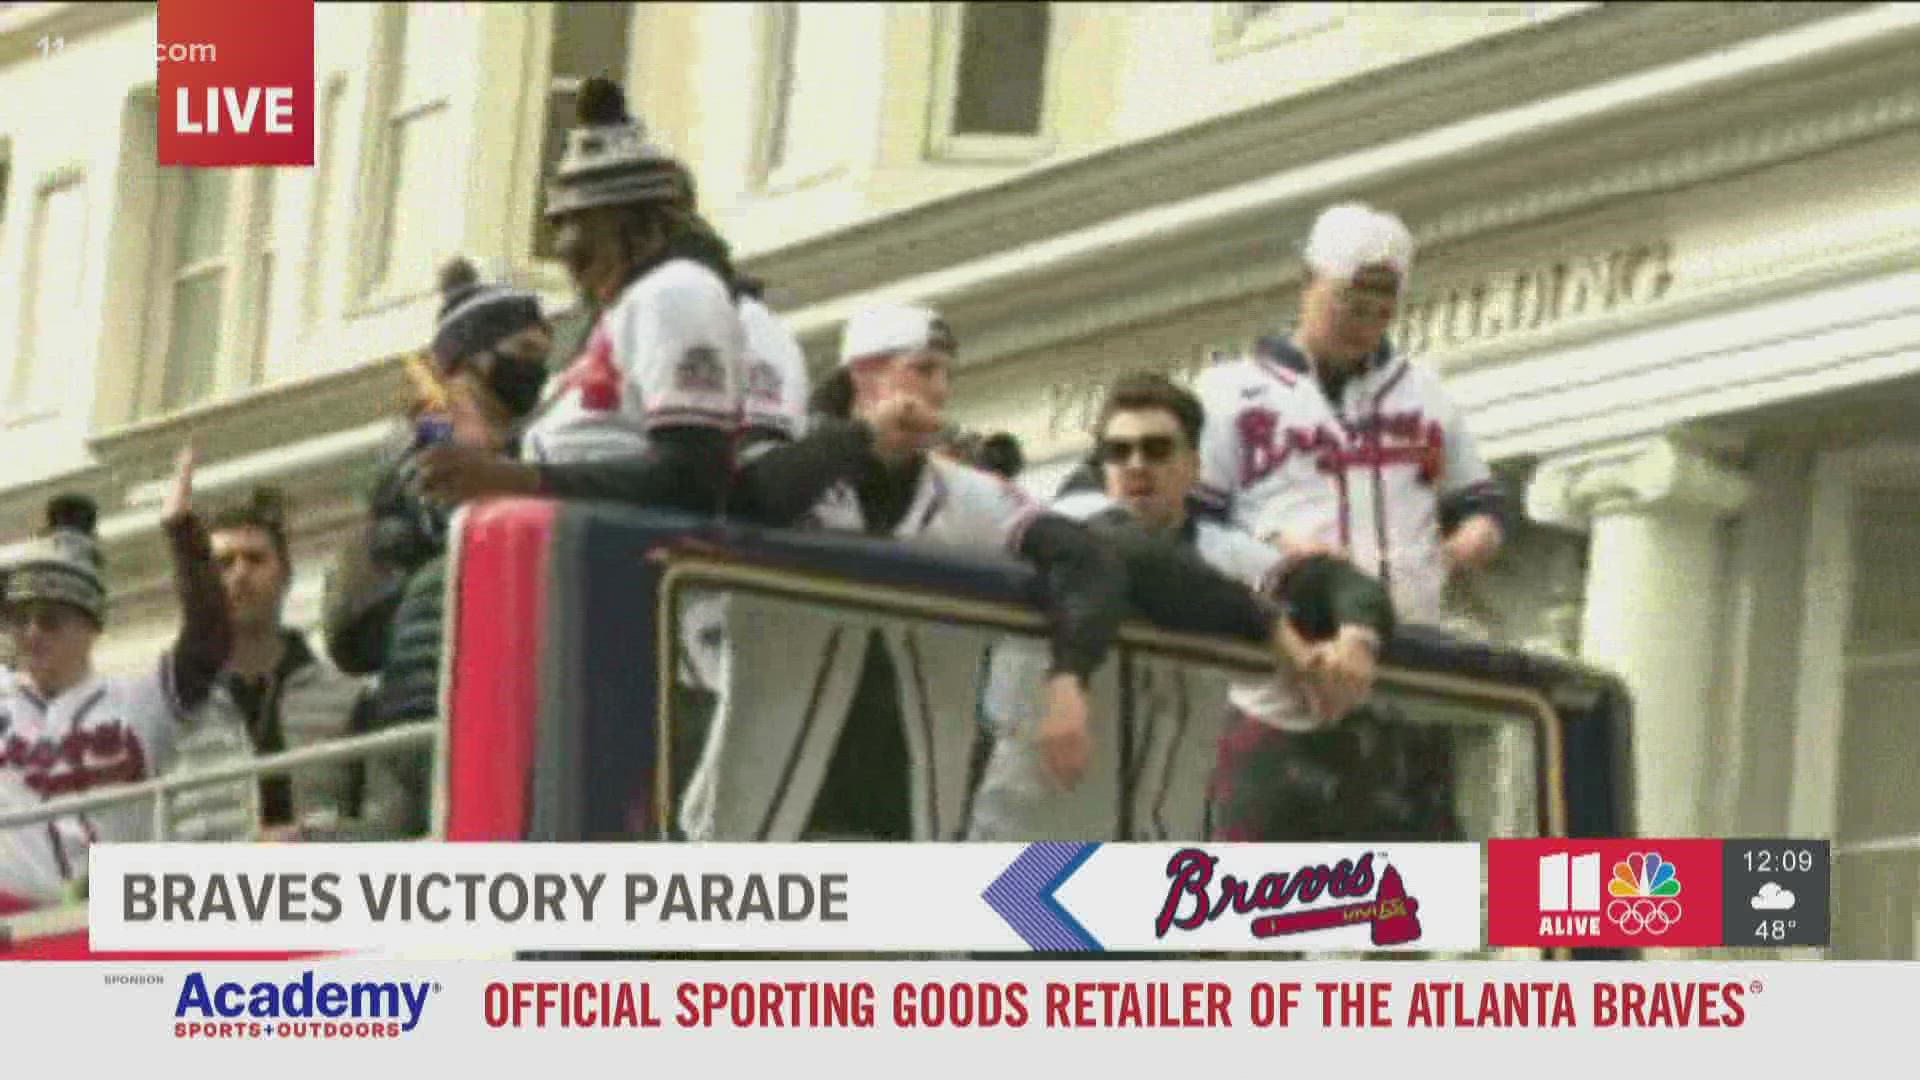 Joc Pederson throws 'pearls' in Braves parade crowd